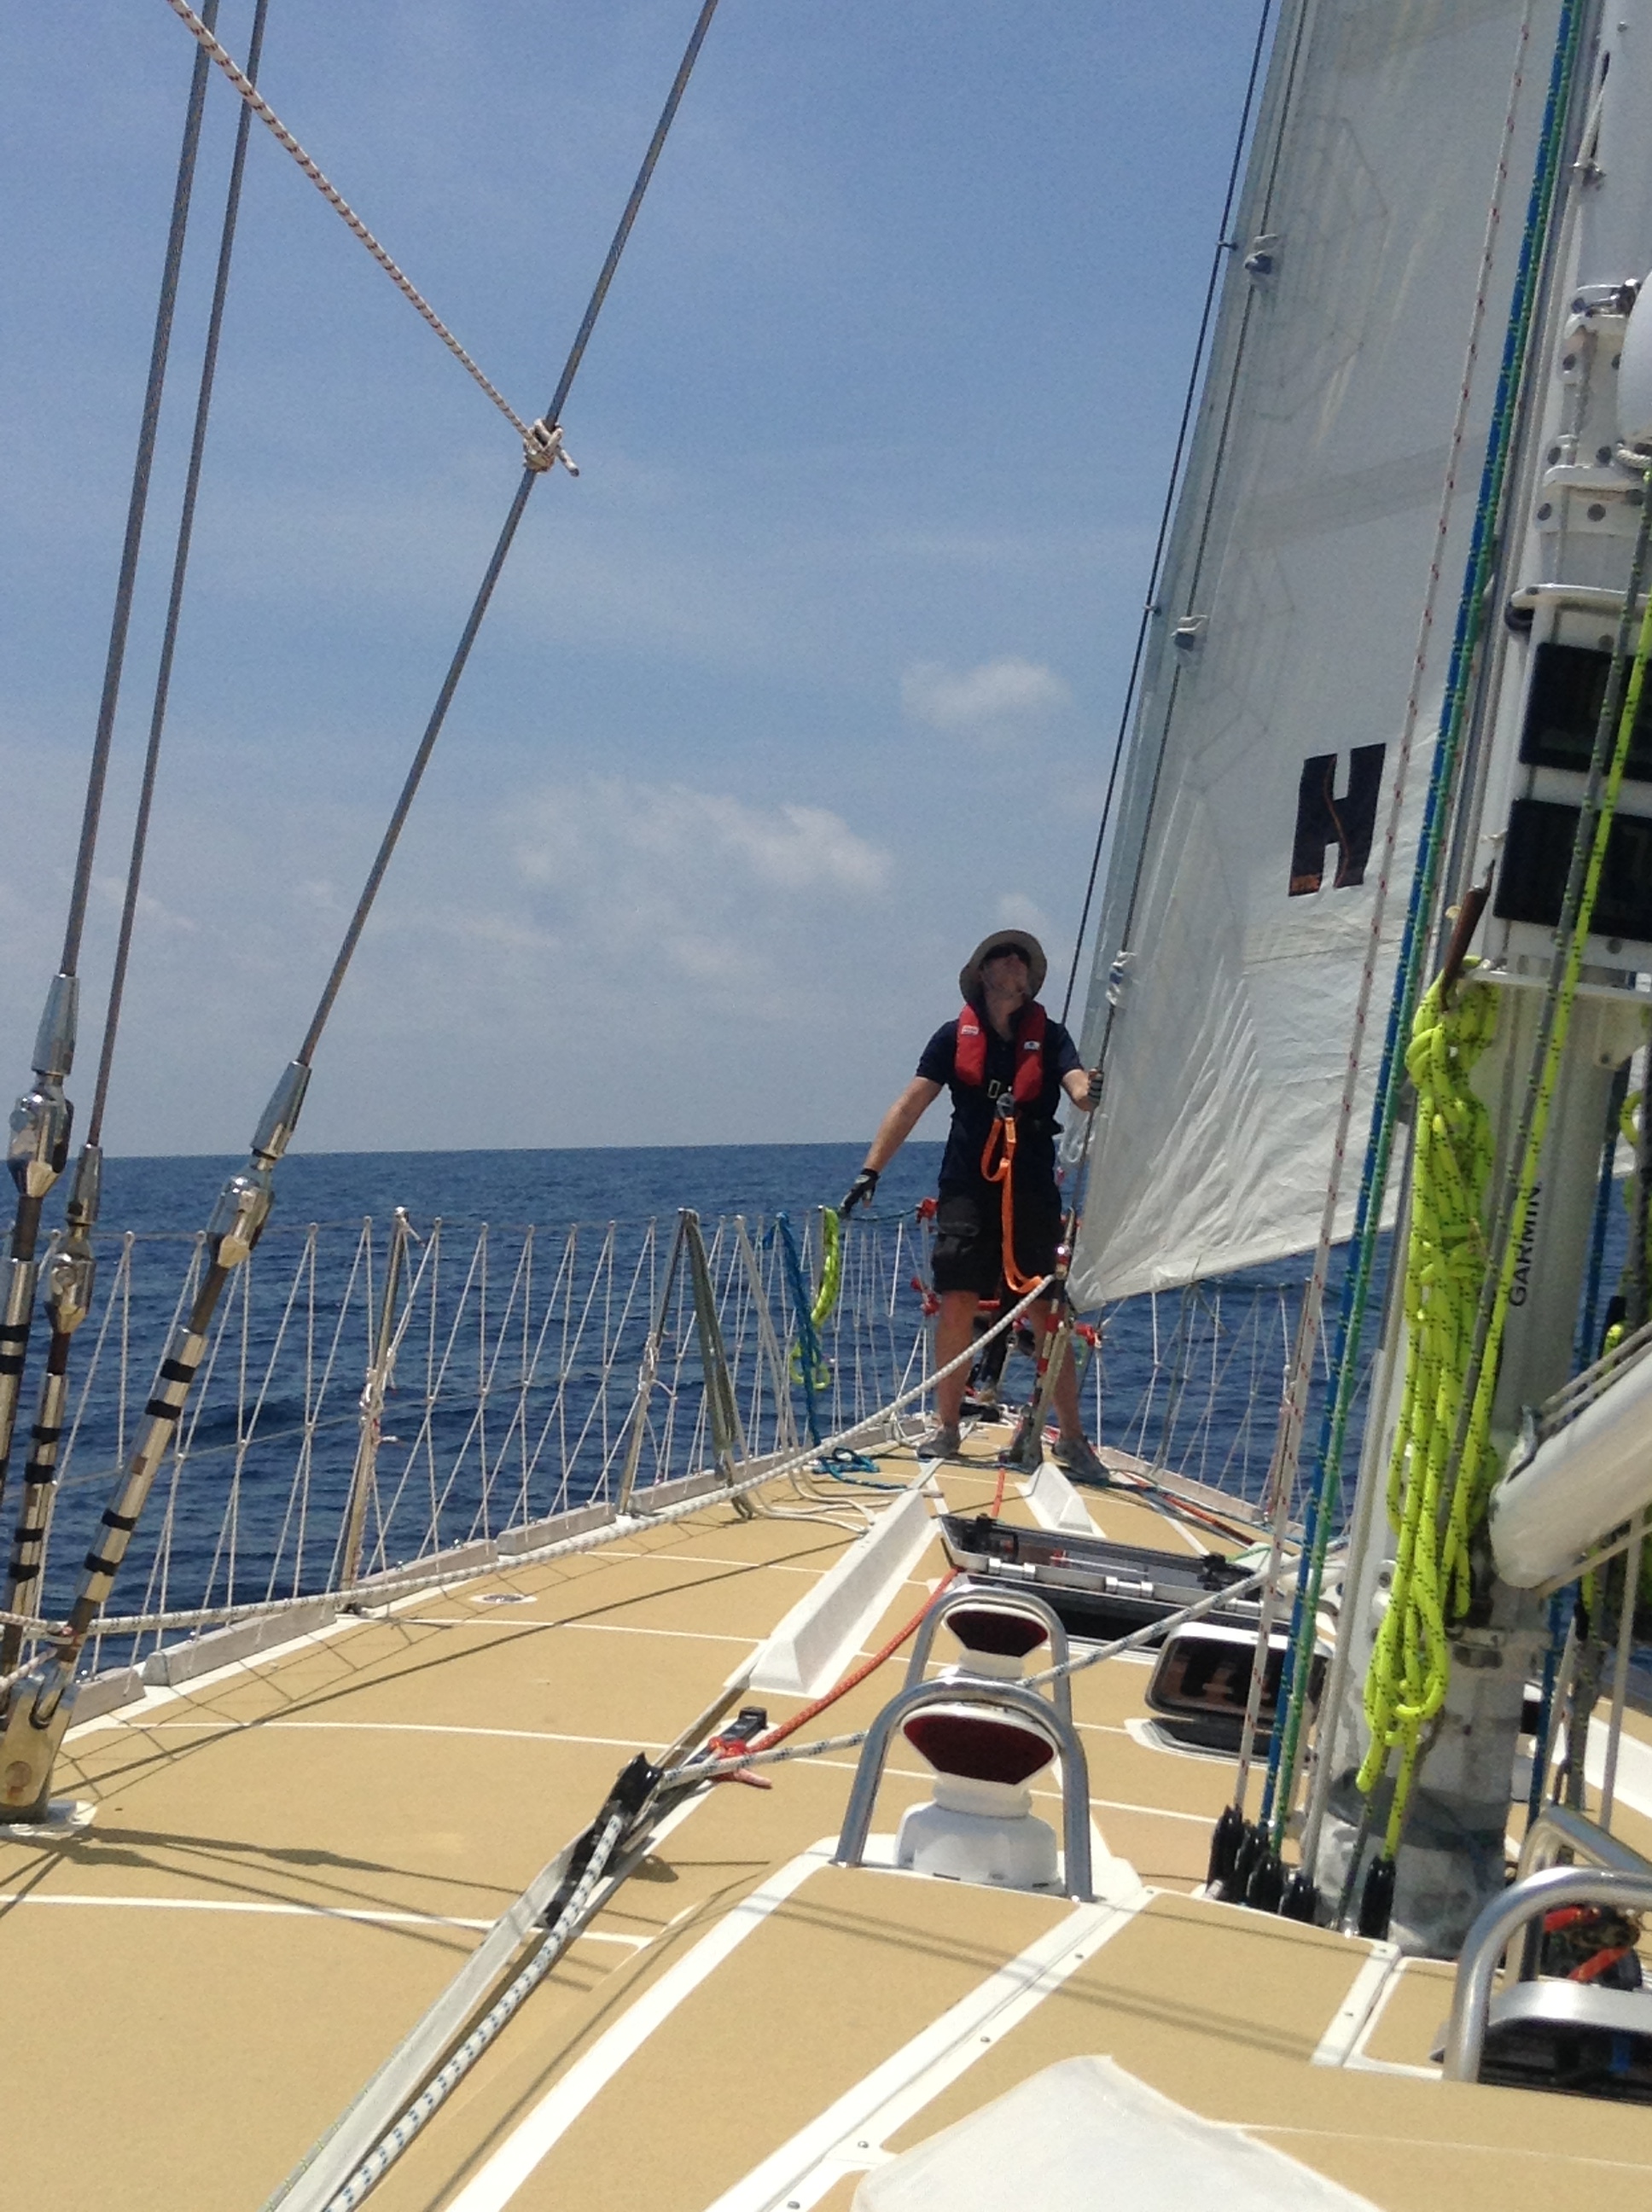 John checking sail trim